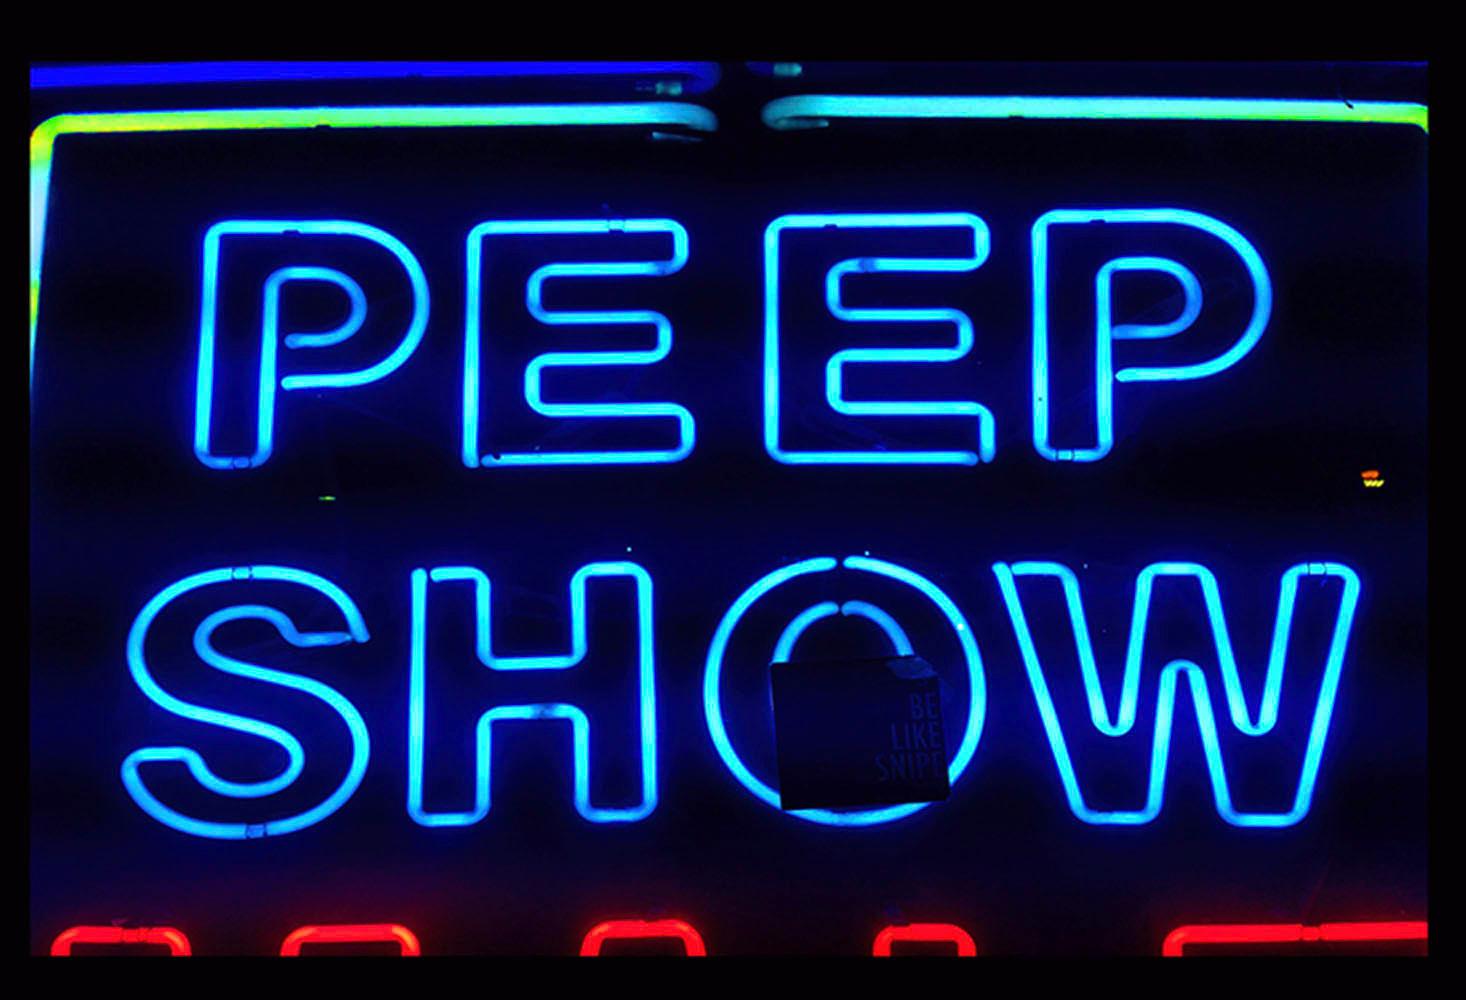 Richard Heeps Peep Show New York Neon Color Street Photography For Sale At 1stdibs